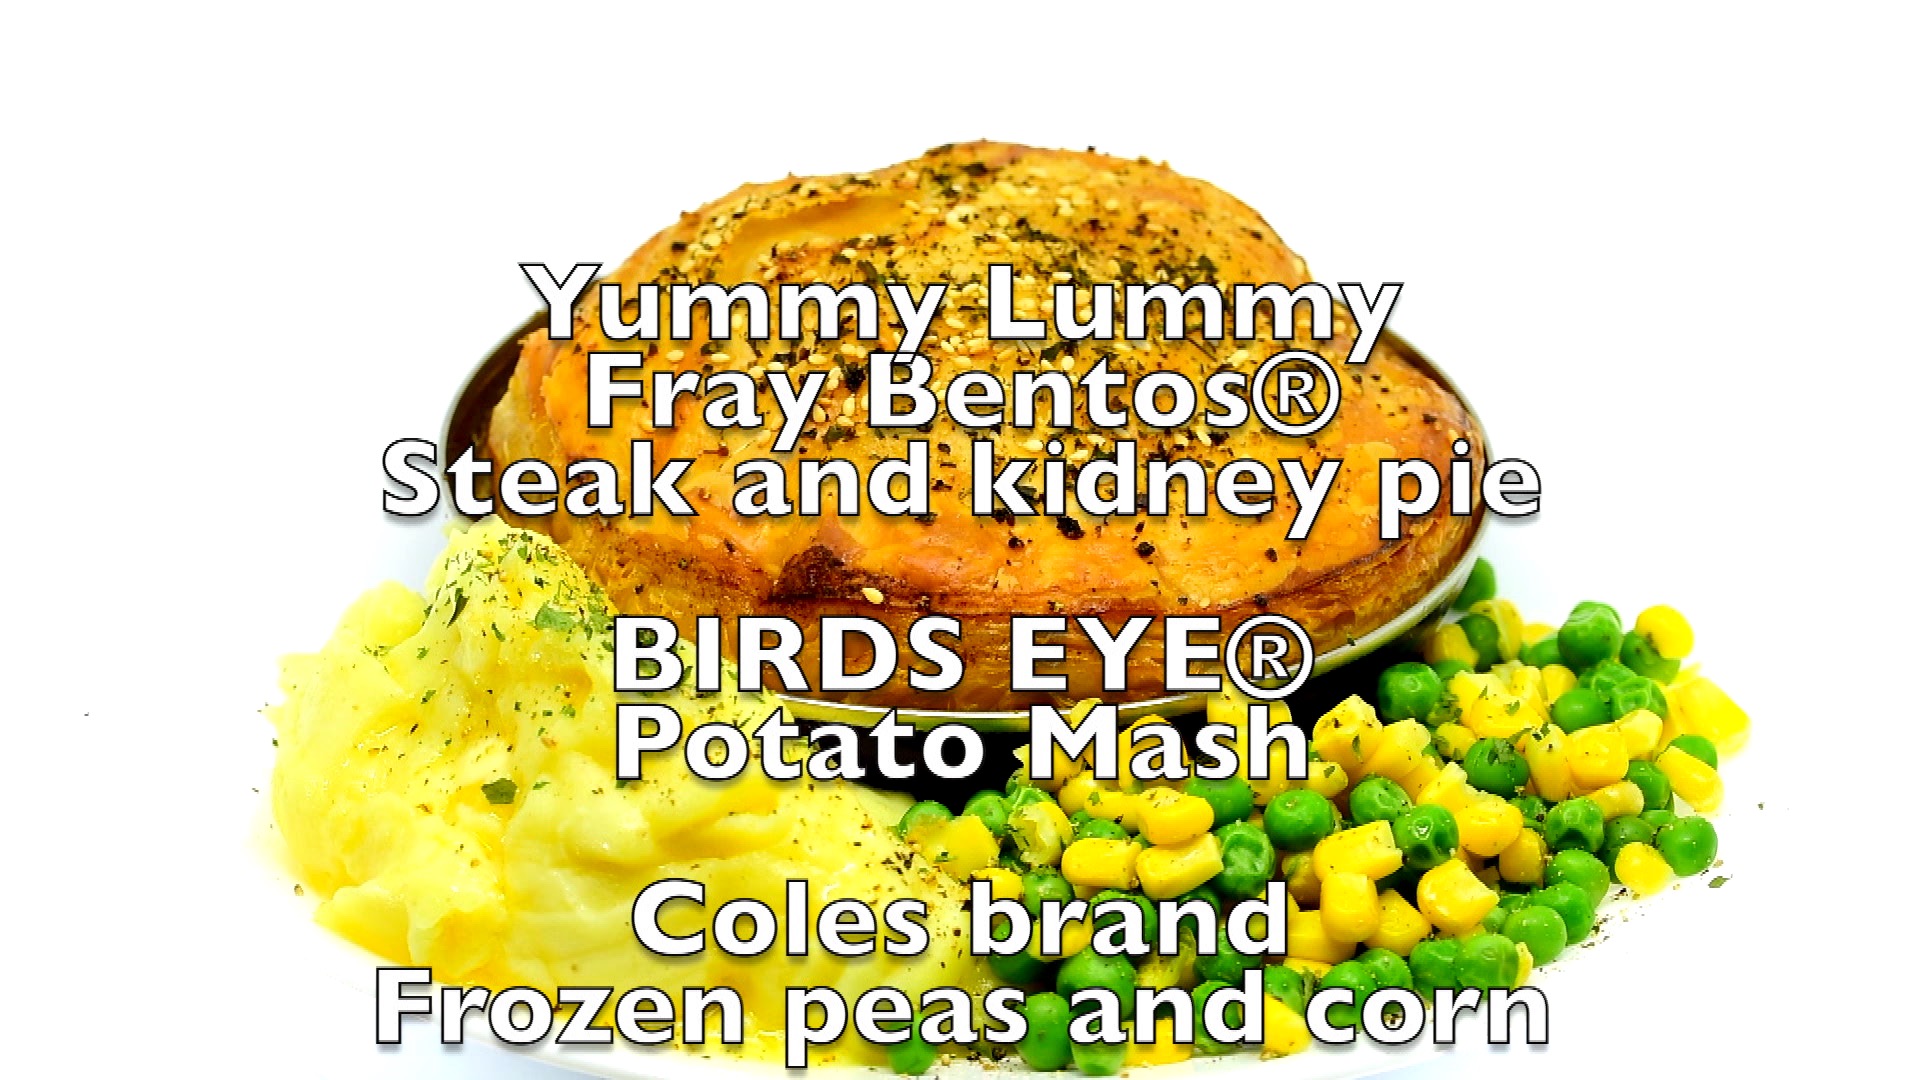 https://yummylummy.com/wp-content/uploads/2018/10/Fray-Bentos-Steak-and-kidney-pie-m4v-image.jpg